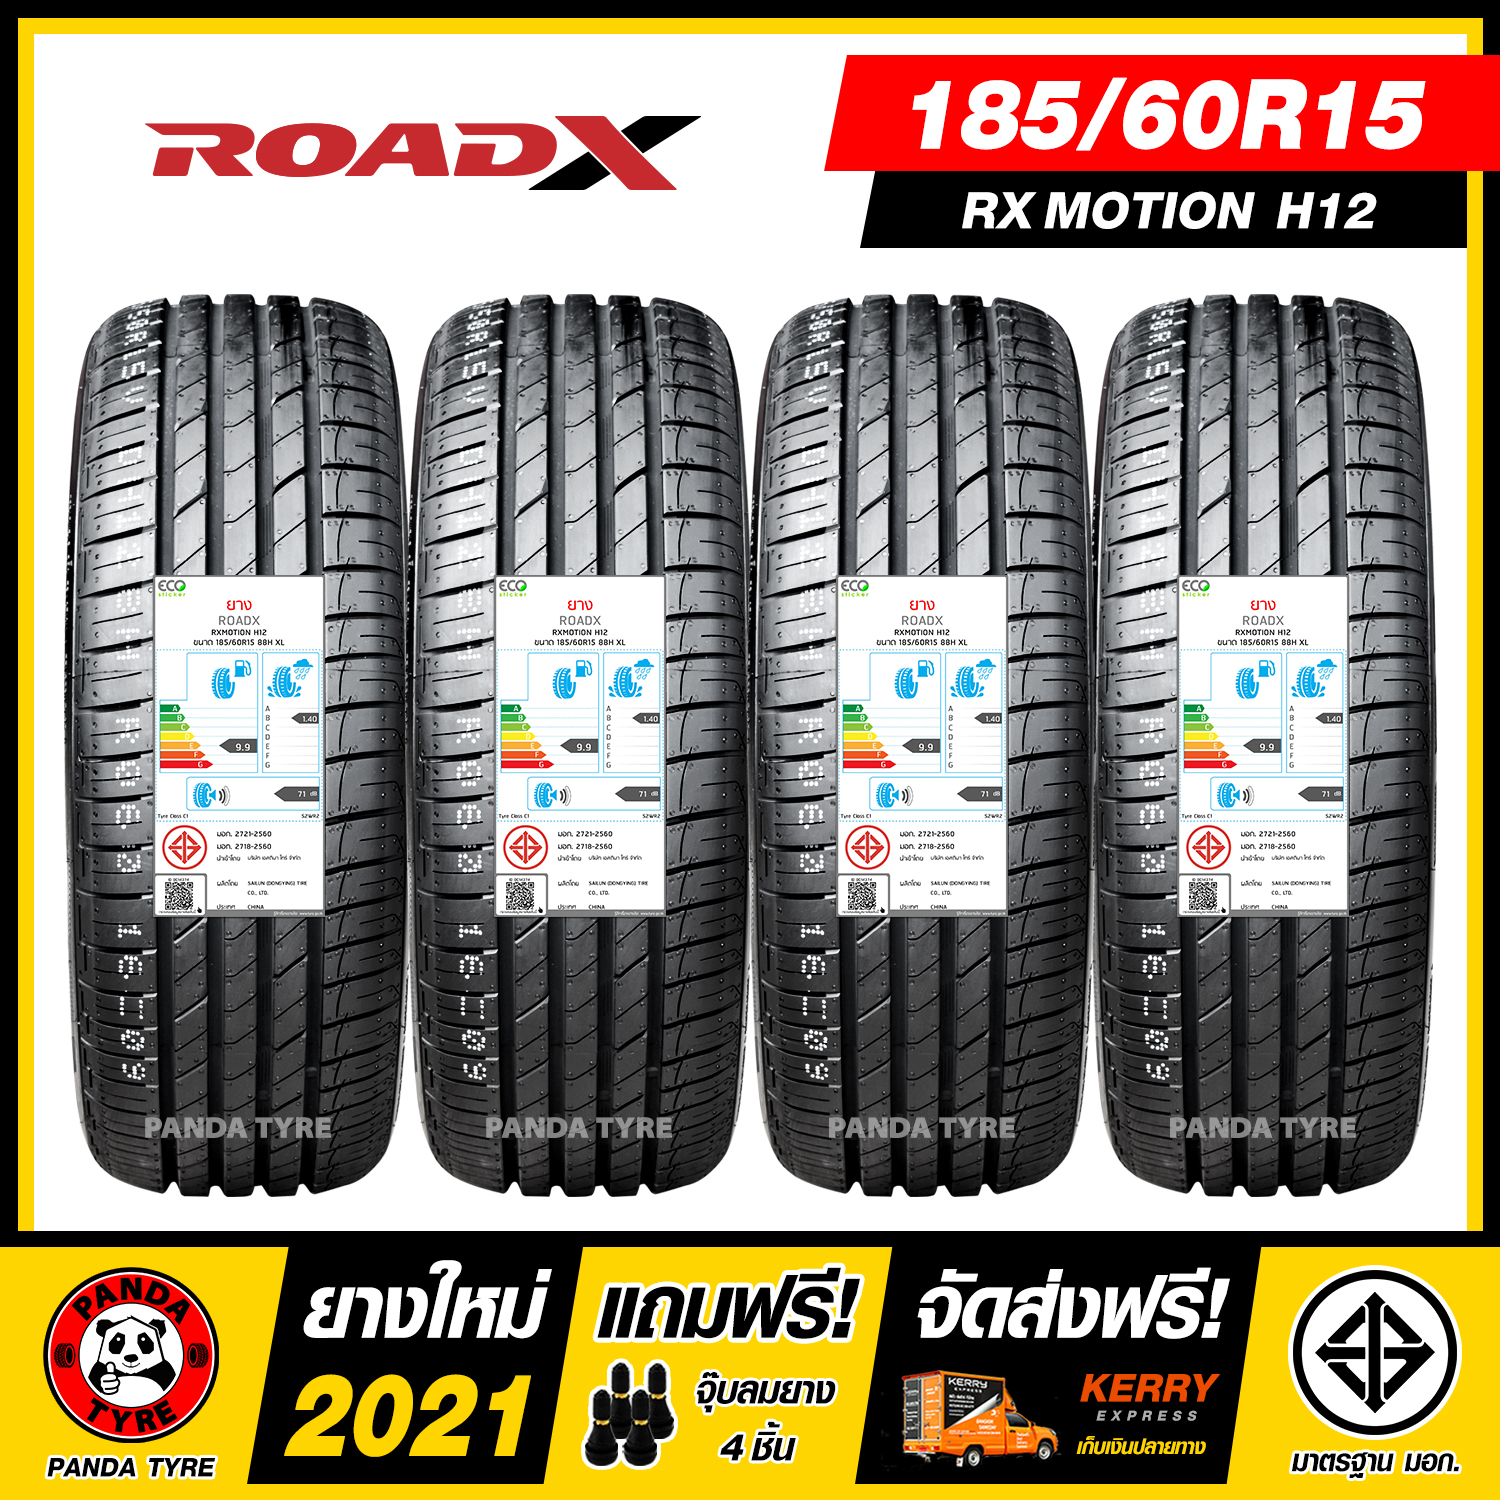 ROADX 185/60R15 ยางรถยนต์ขอบ15 รุ่น RX MOTION H12 - 4 เส้น (ยางใหม่ผลิตปี 2021)